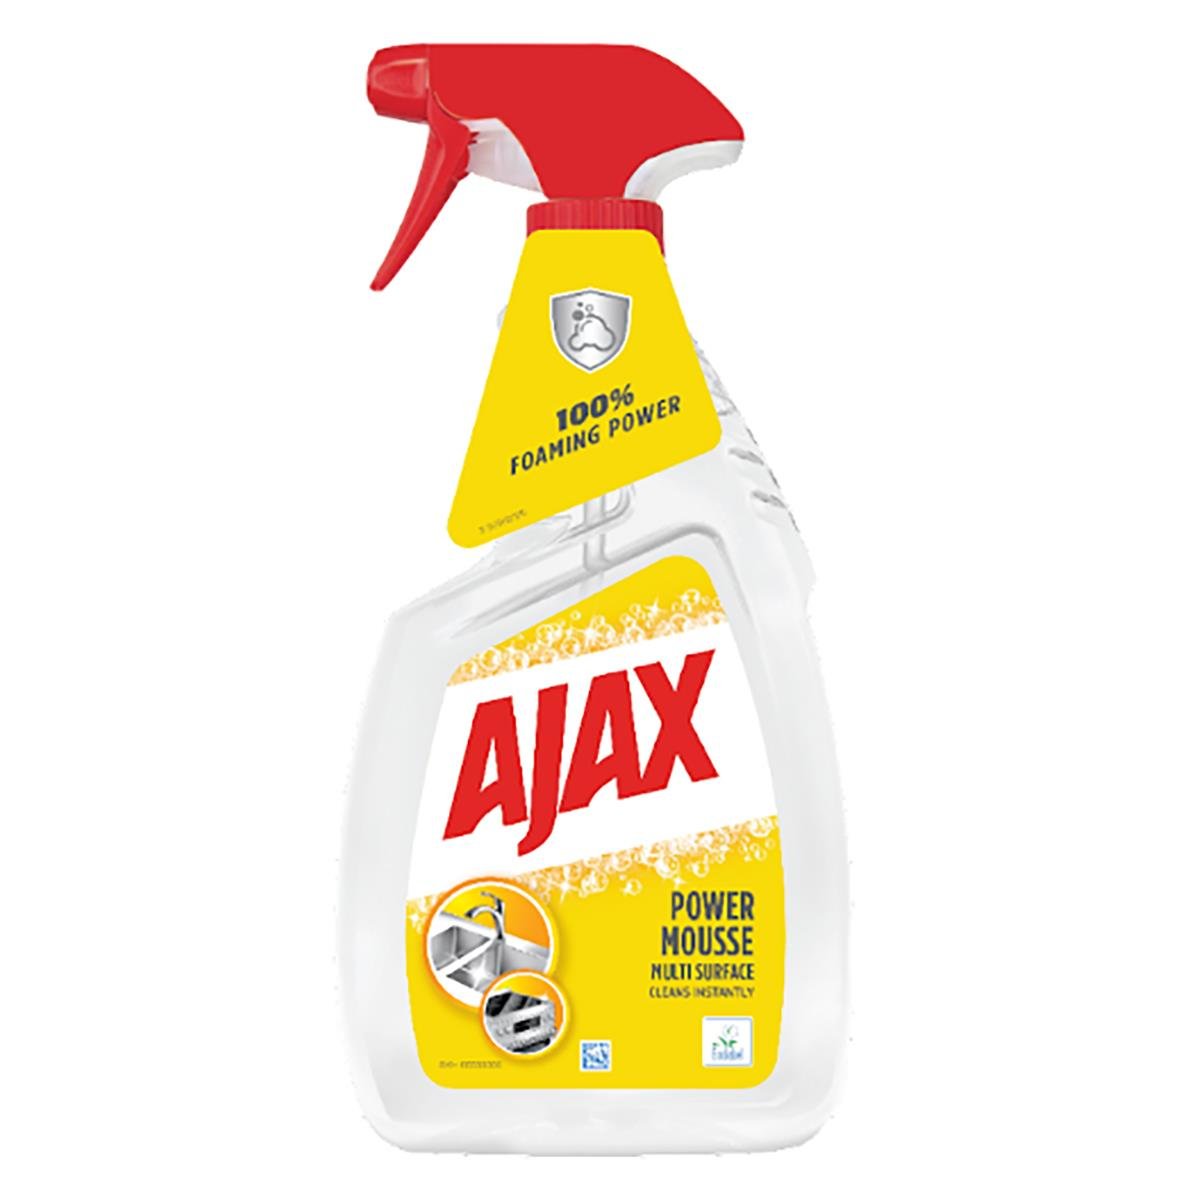 Allrent Ajax Power Mouse Spray Multi Surface 500ml